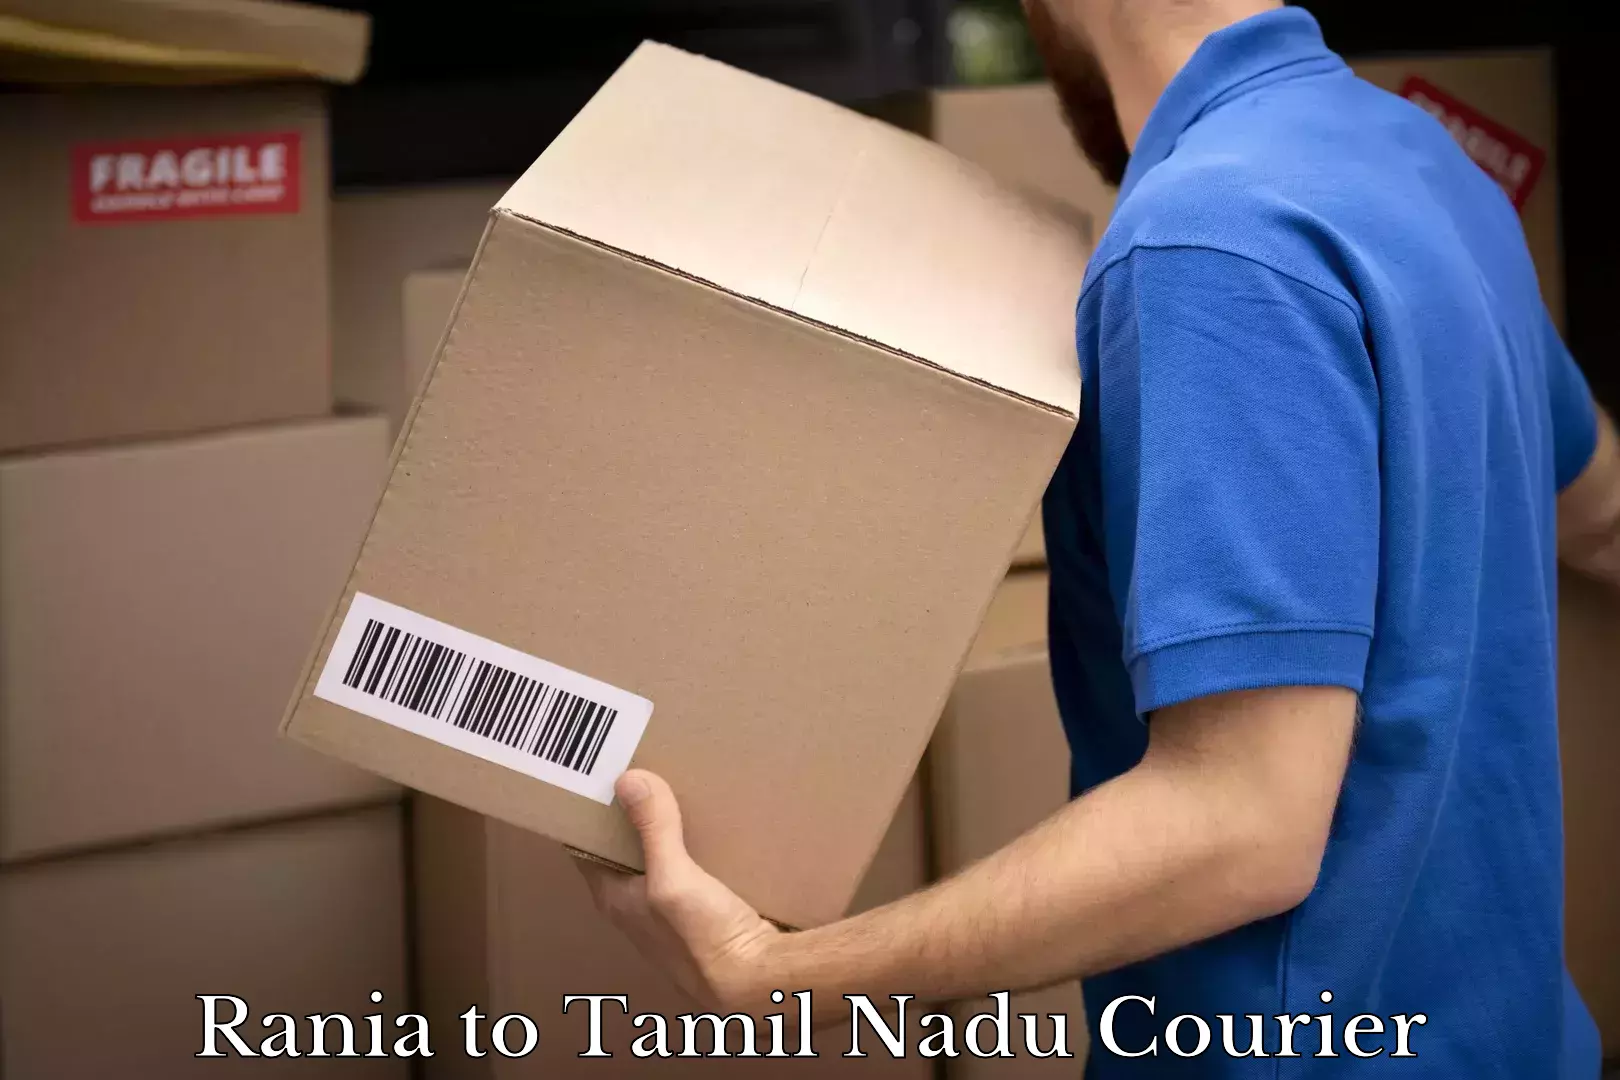 Efficient order fulfillment Rania to Tamil Nadu